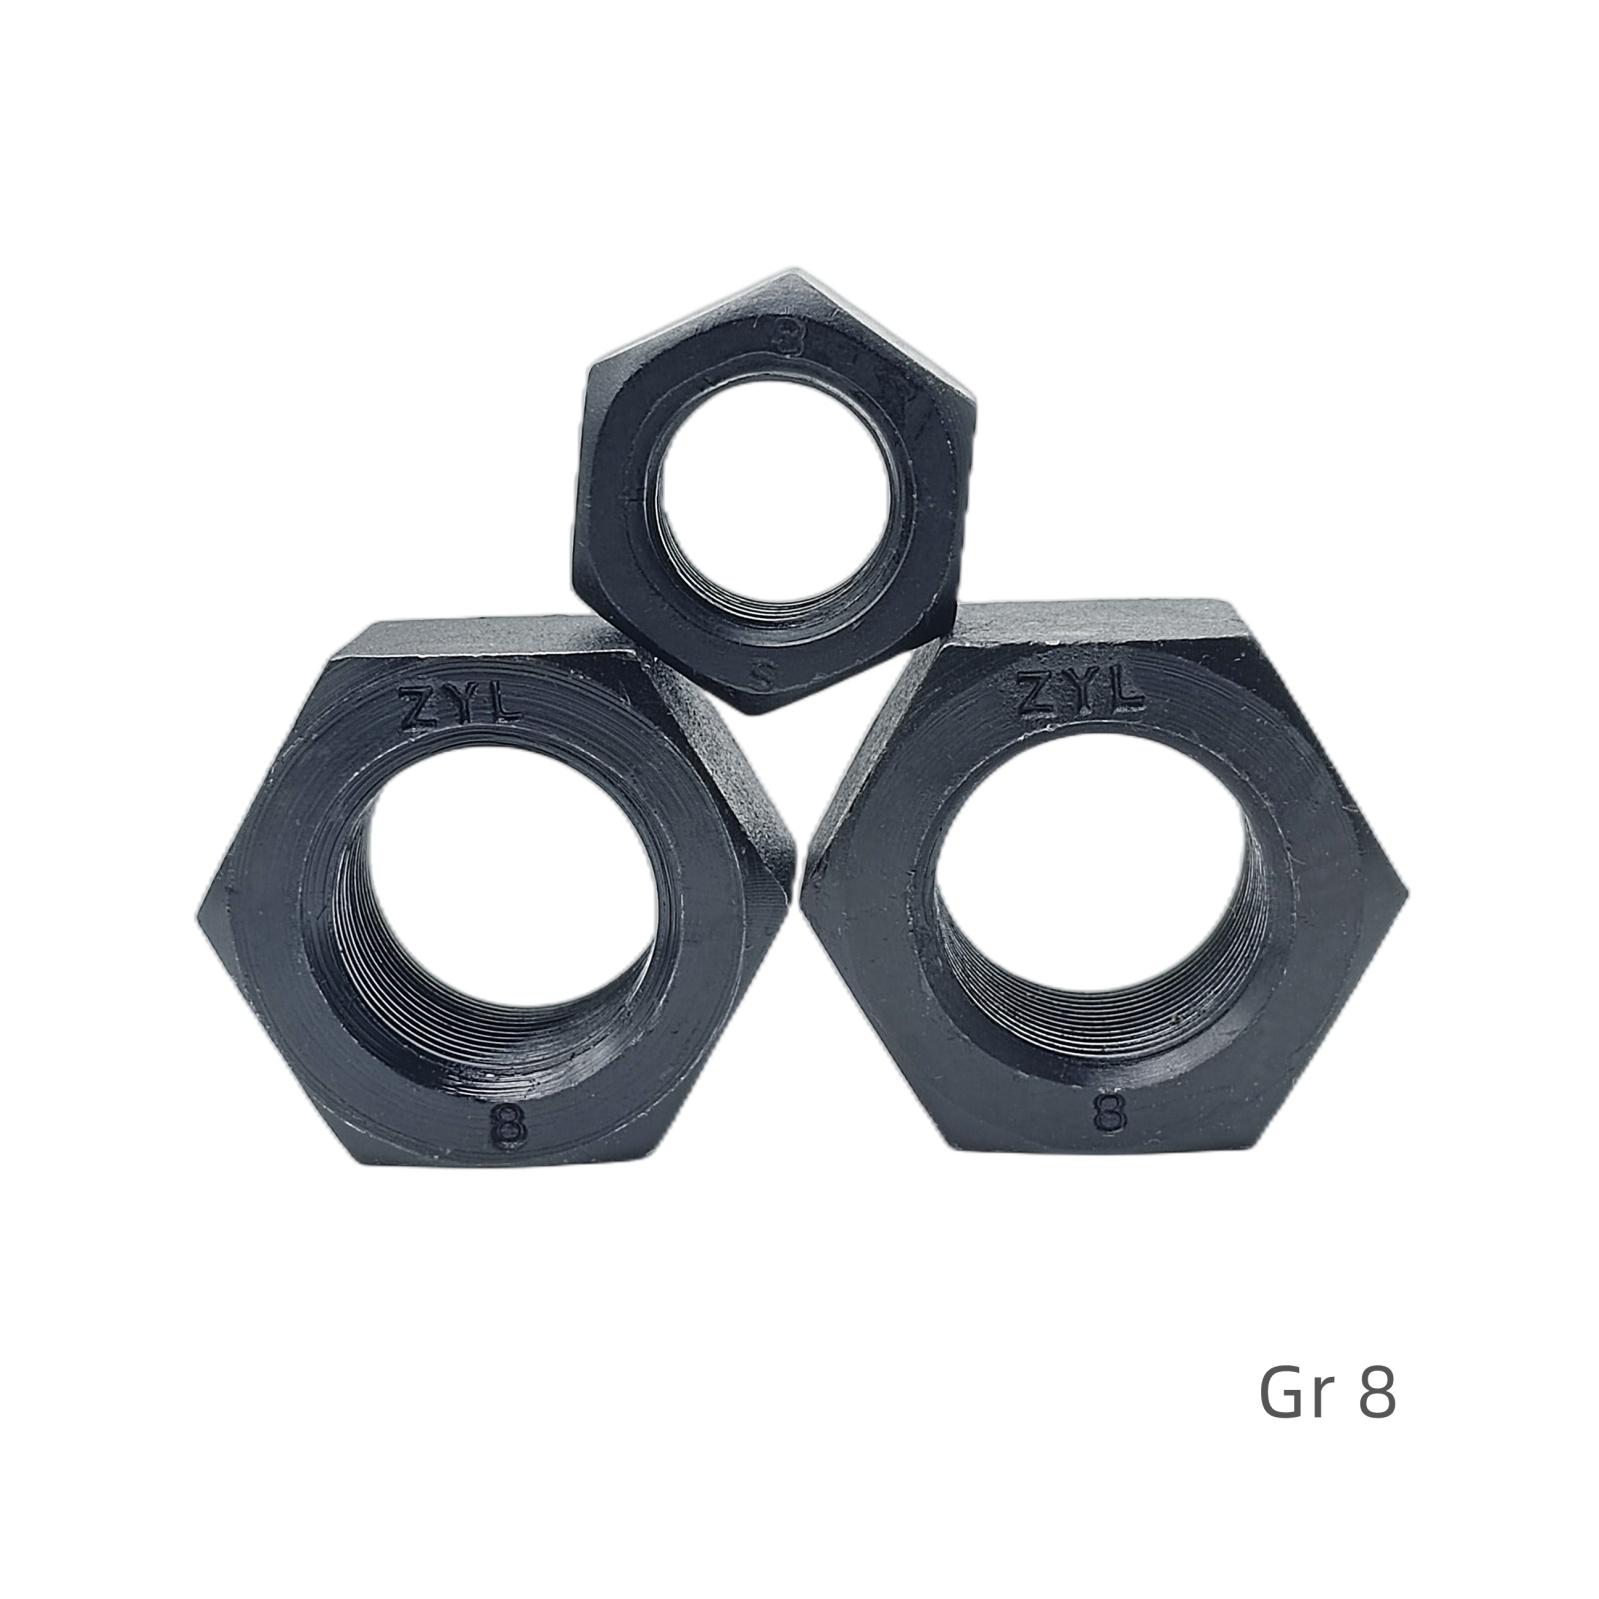 Malosi maualuga carbon sila hexagon nut DIN934 Vasega 8